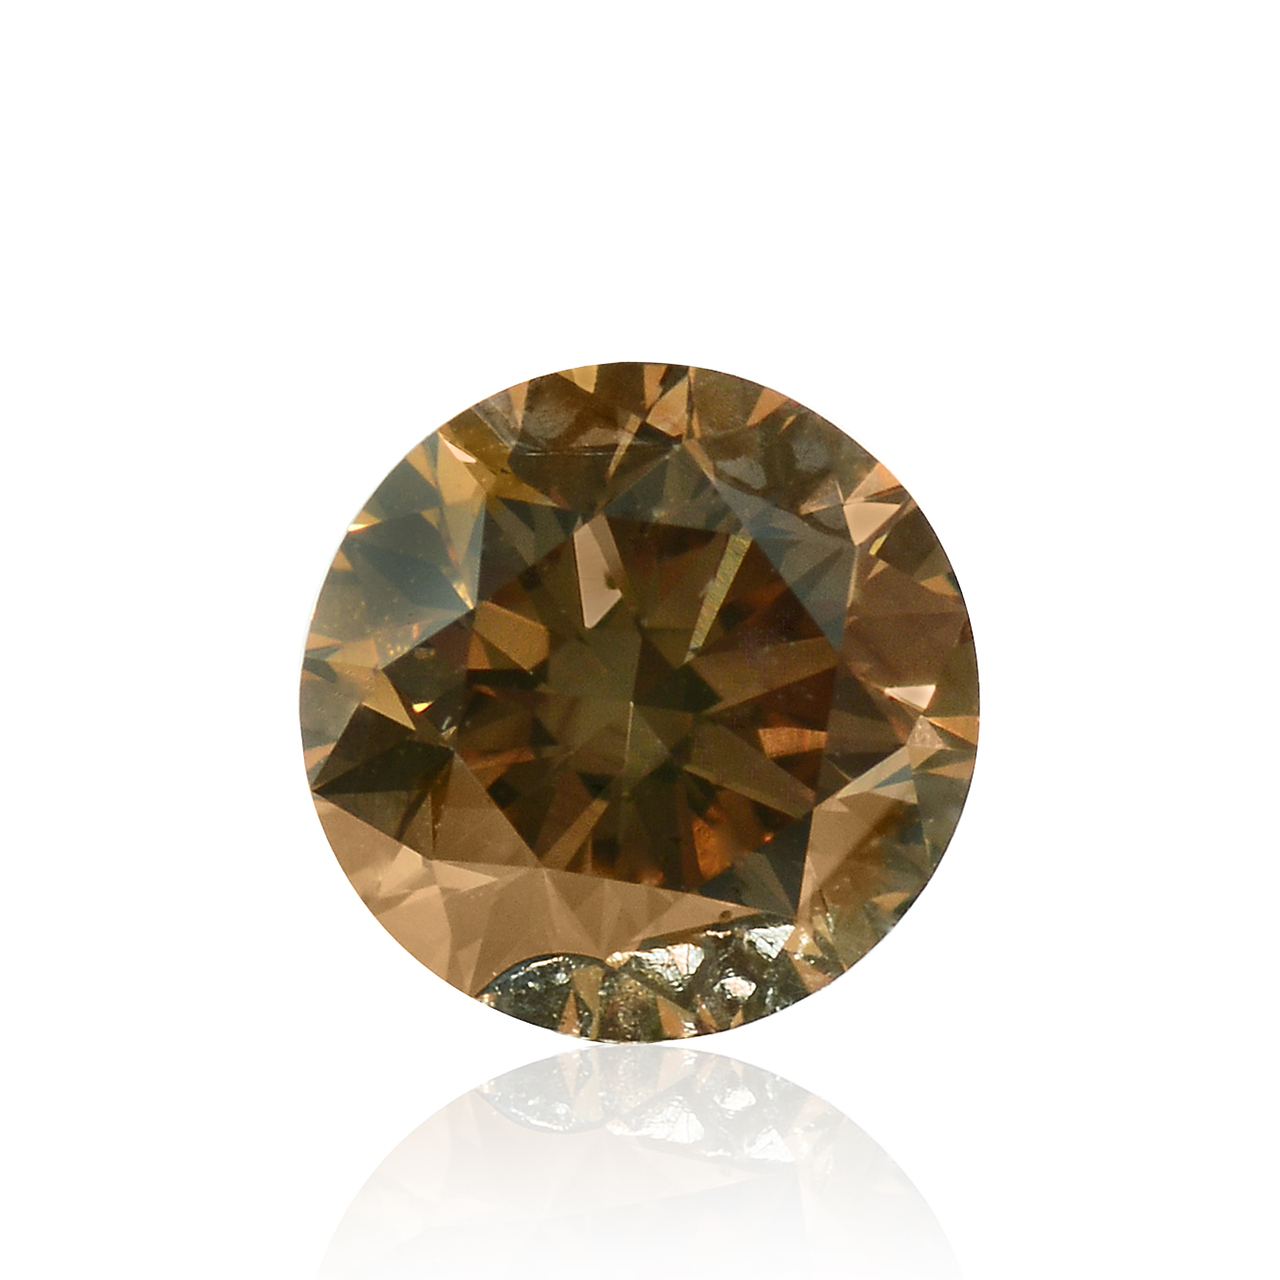 superb star cut diamond for jewelry fancy black color loose diamond 0.52 ct